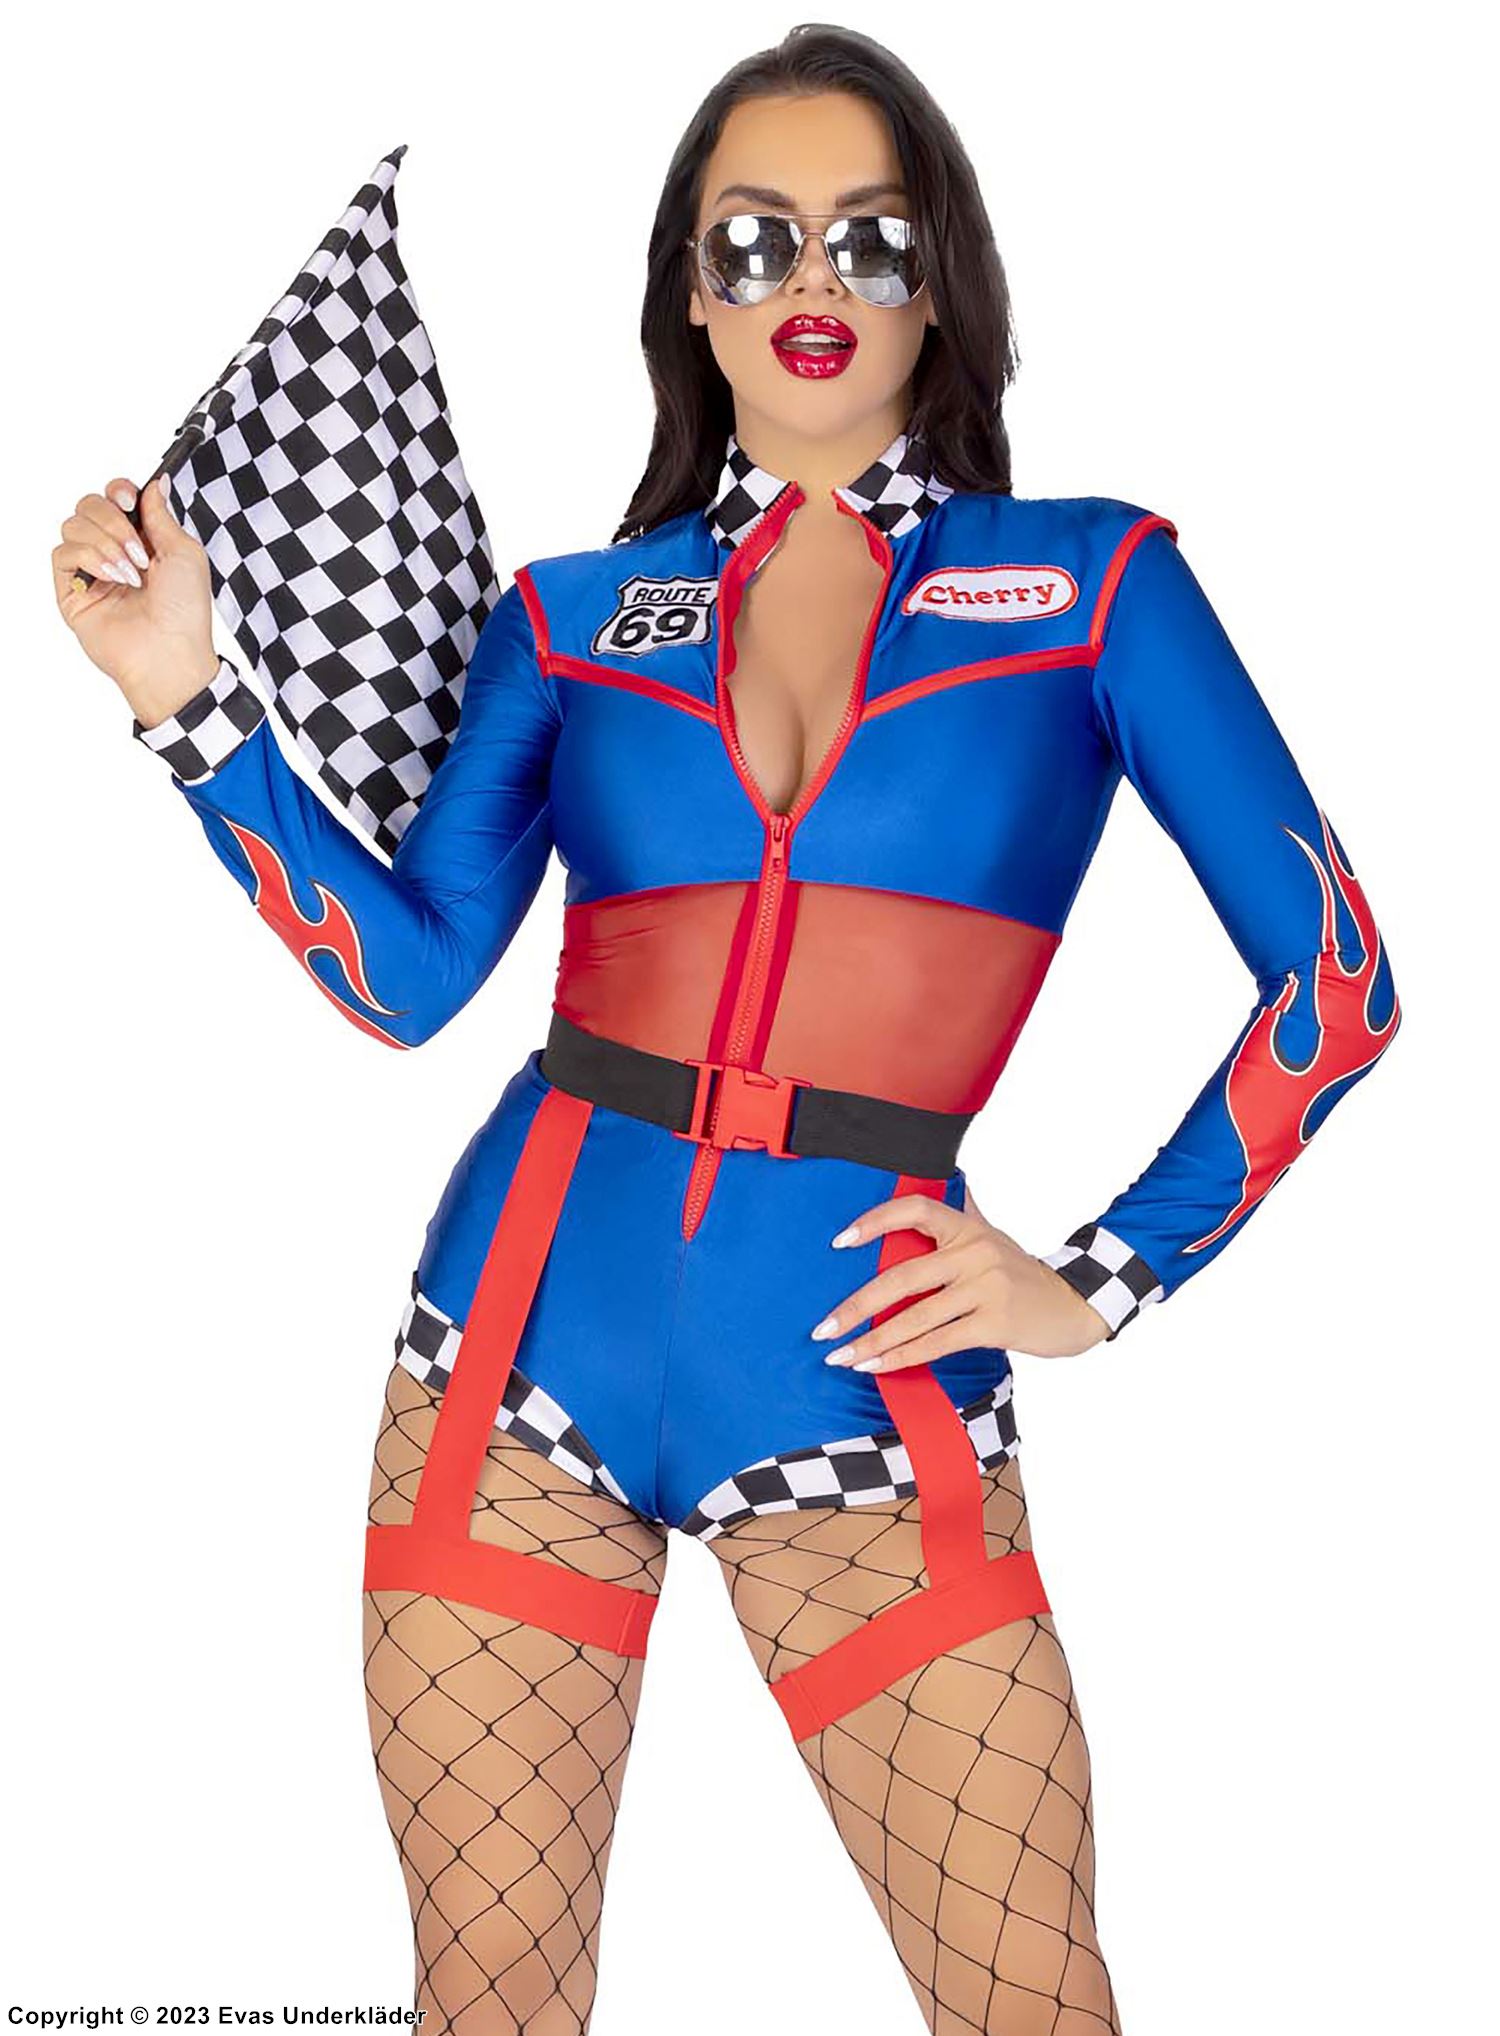 Female racer, costume romper, long sleeves, front zipper, checkered pattern